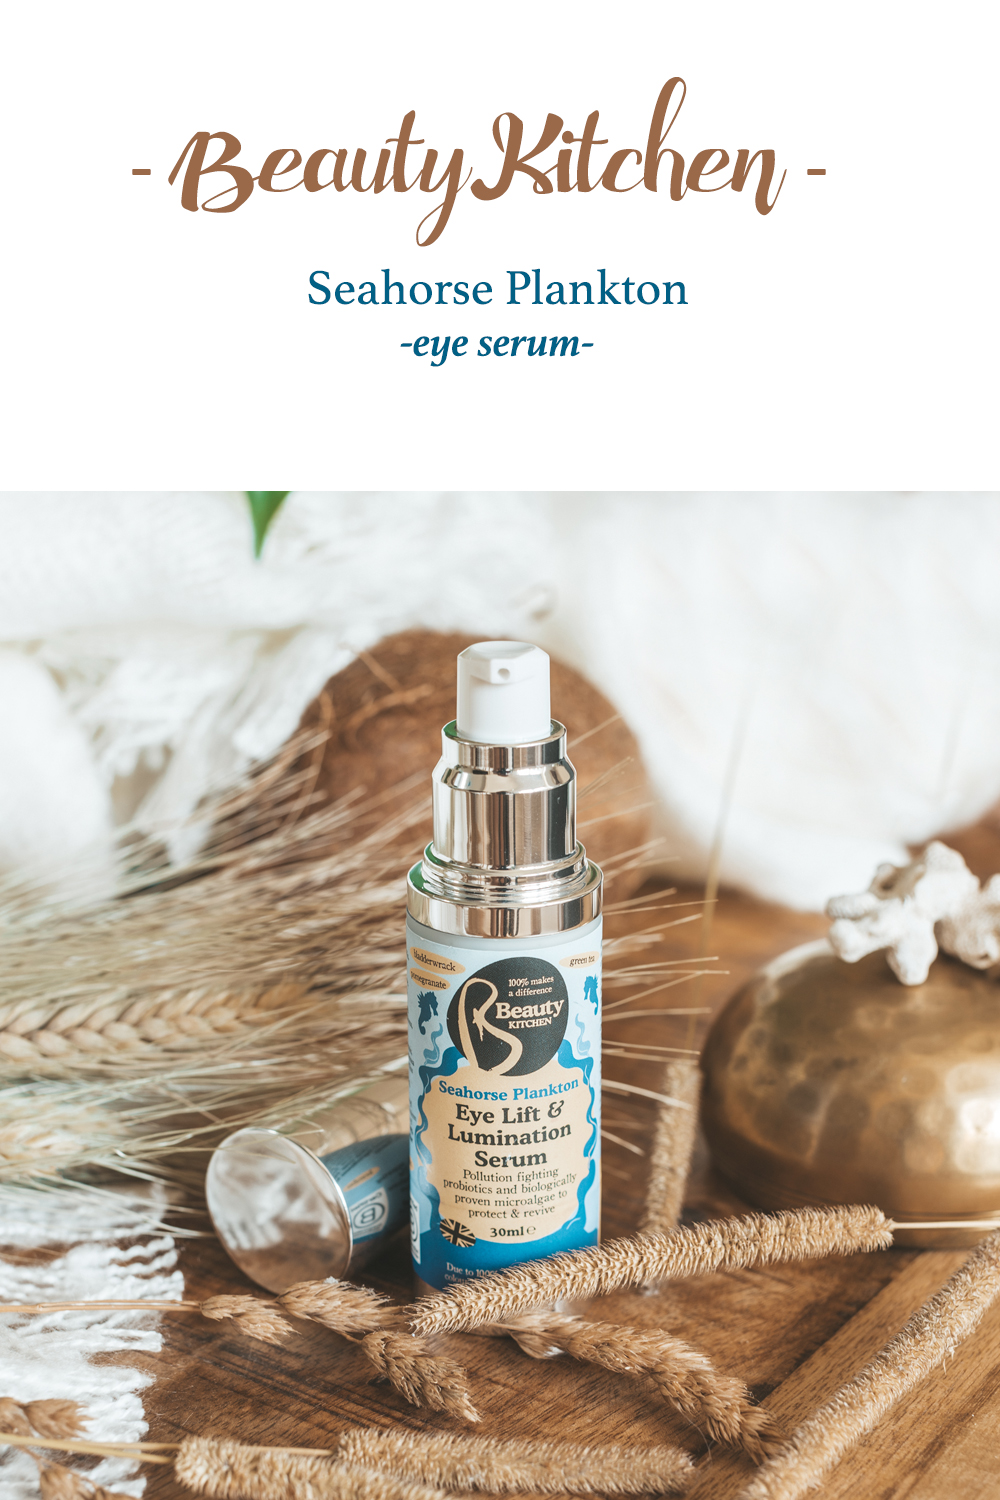 Beauty Kitchen Seahorse Plankton Eye Lift & Lumination Serum review